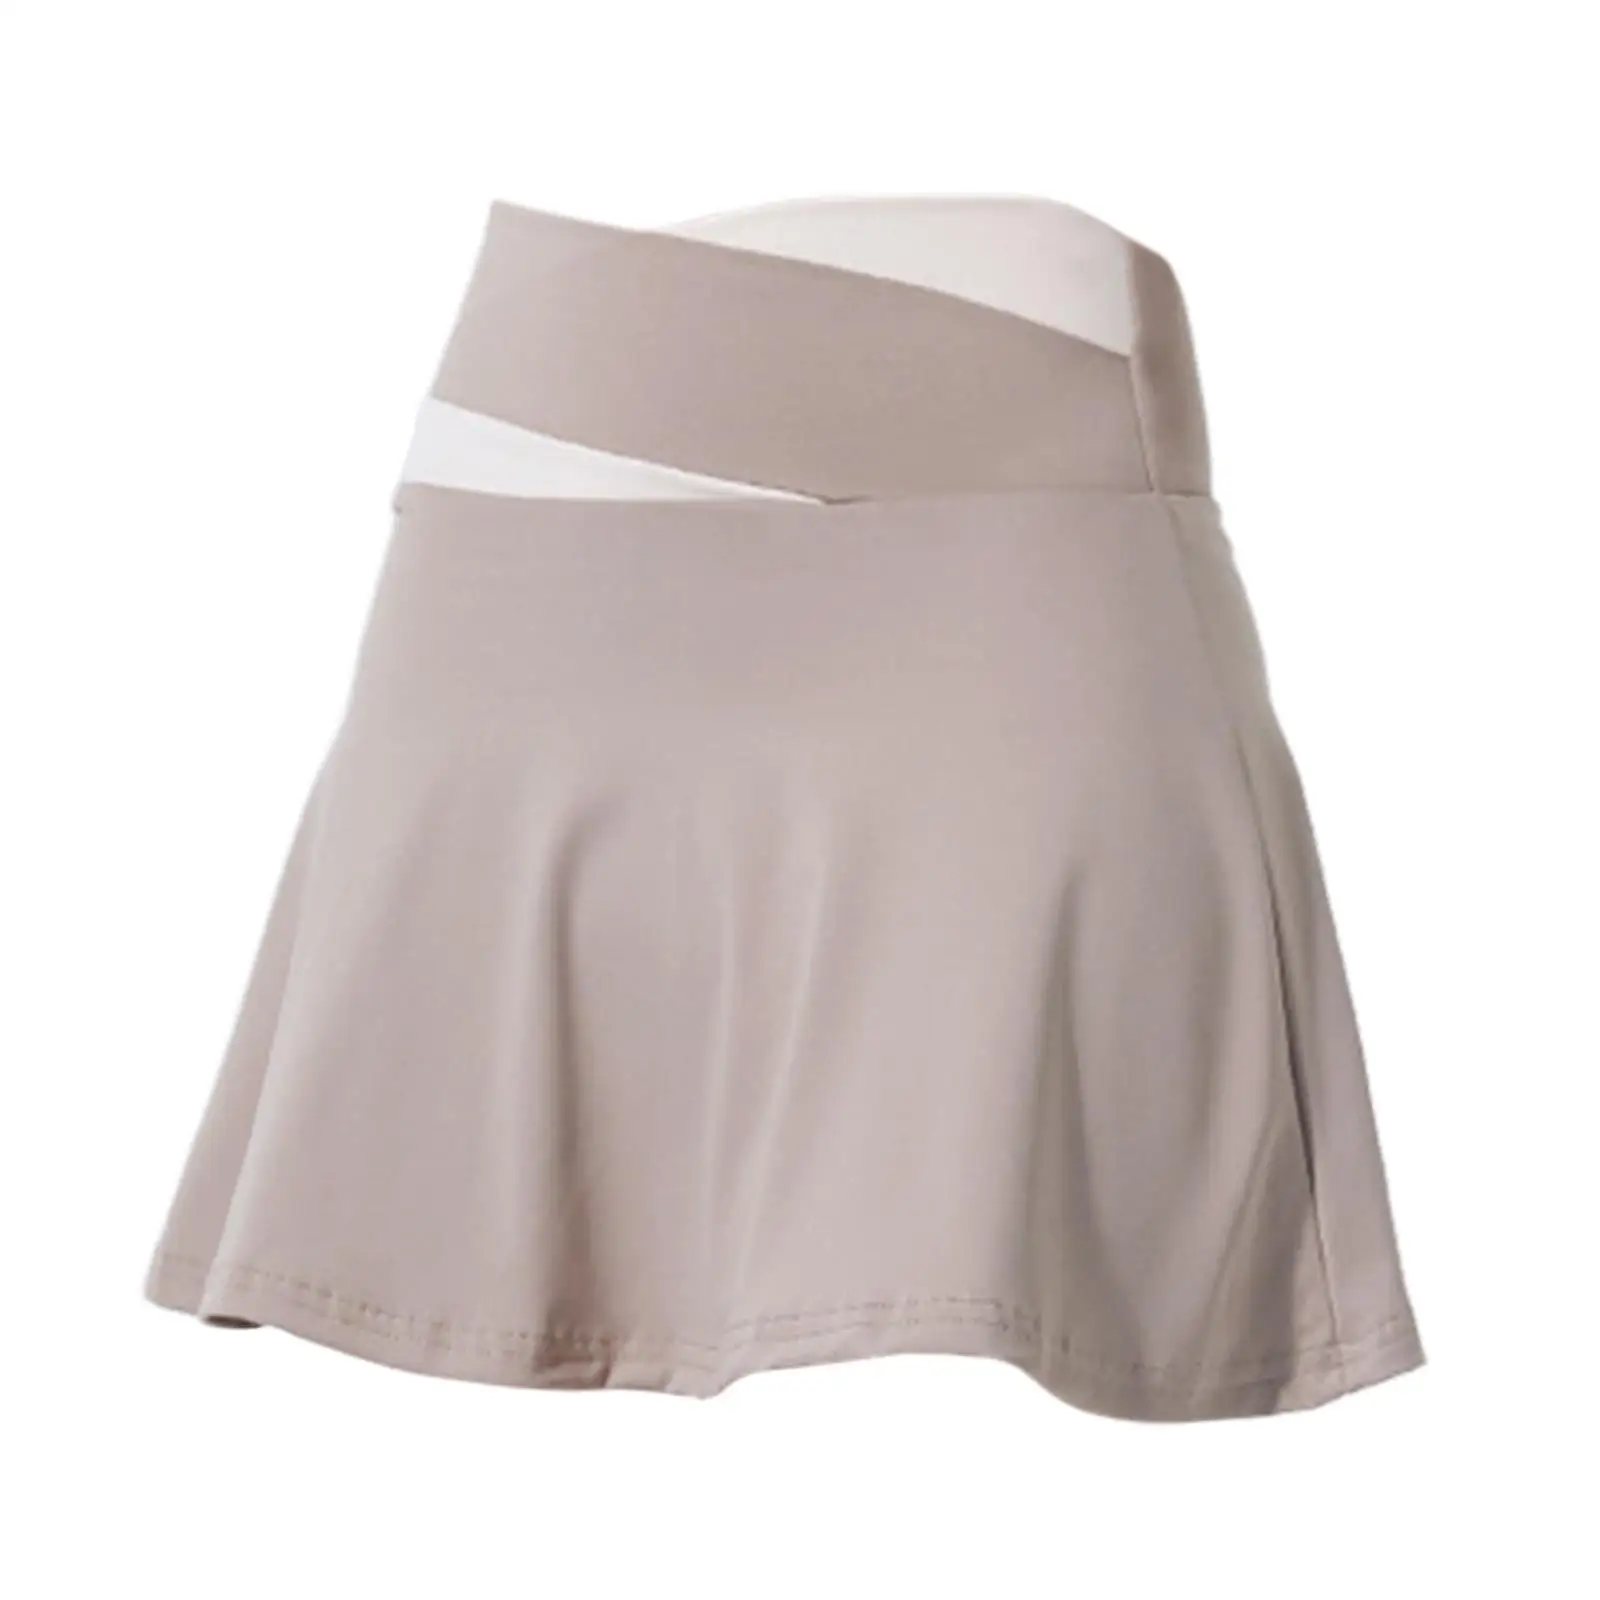 Tennis Skirts Short Skirts Activewear Outfits Athletic Soft High Waist Golf Skorts Skirts for Golf Sports Jogging Tennis